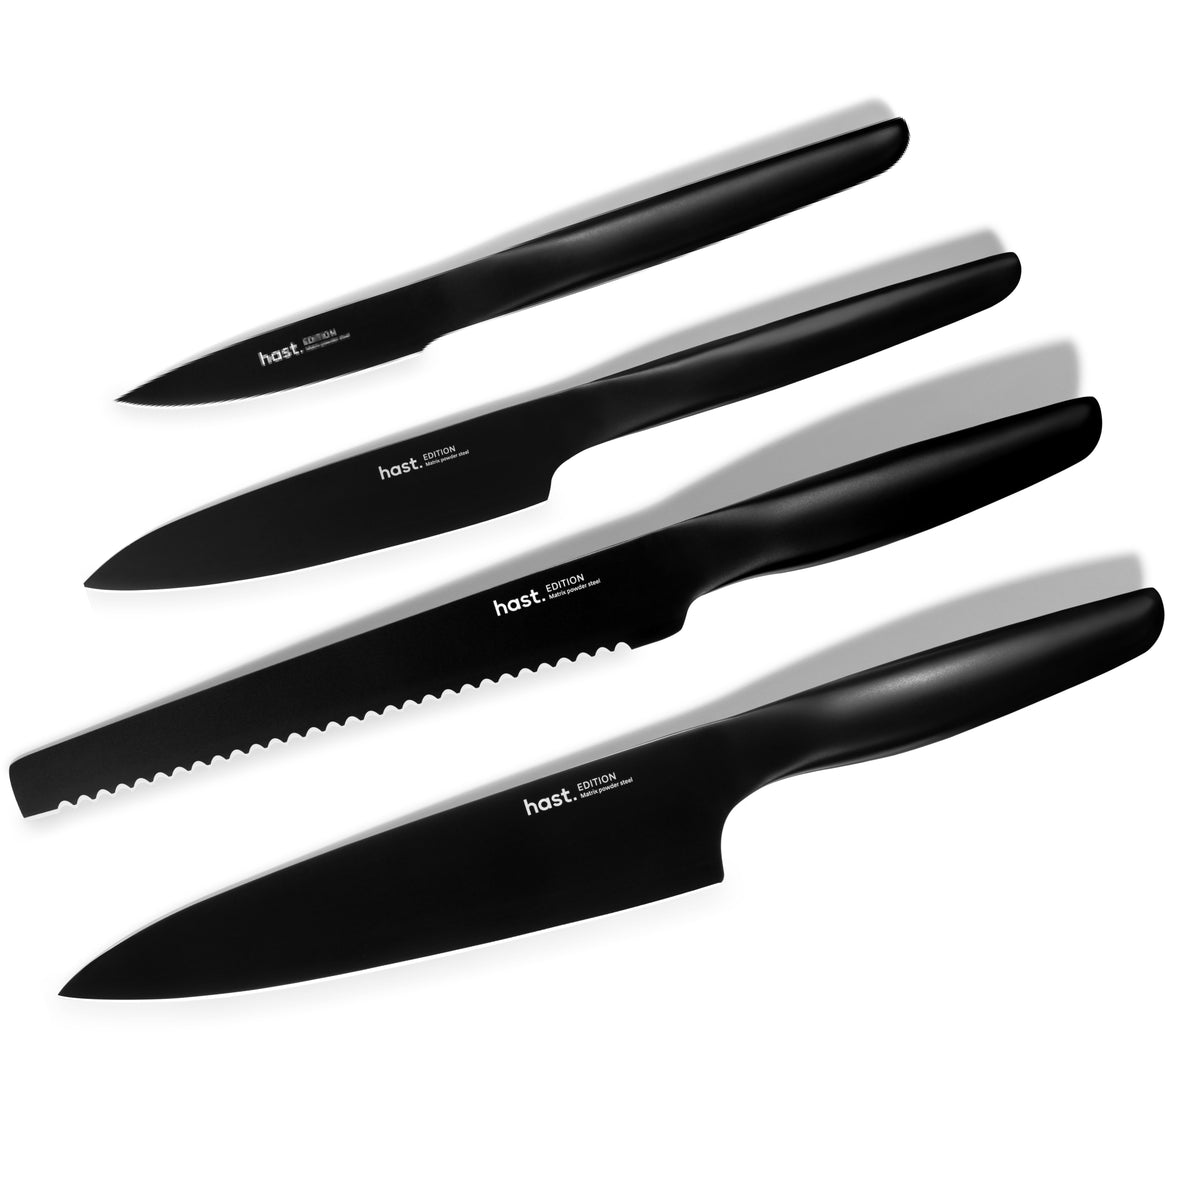 Selection Series 4-Piece Modern Japanese Steel Knife